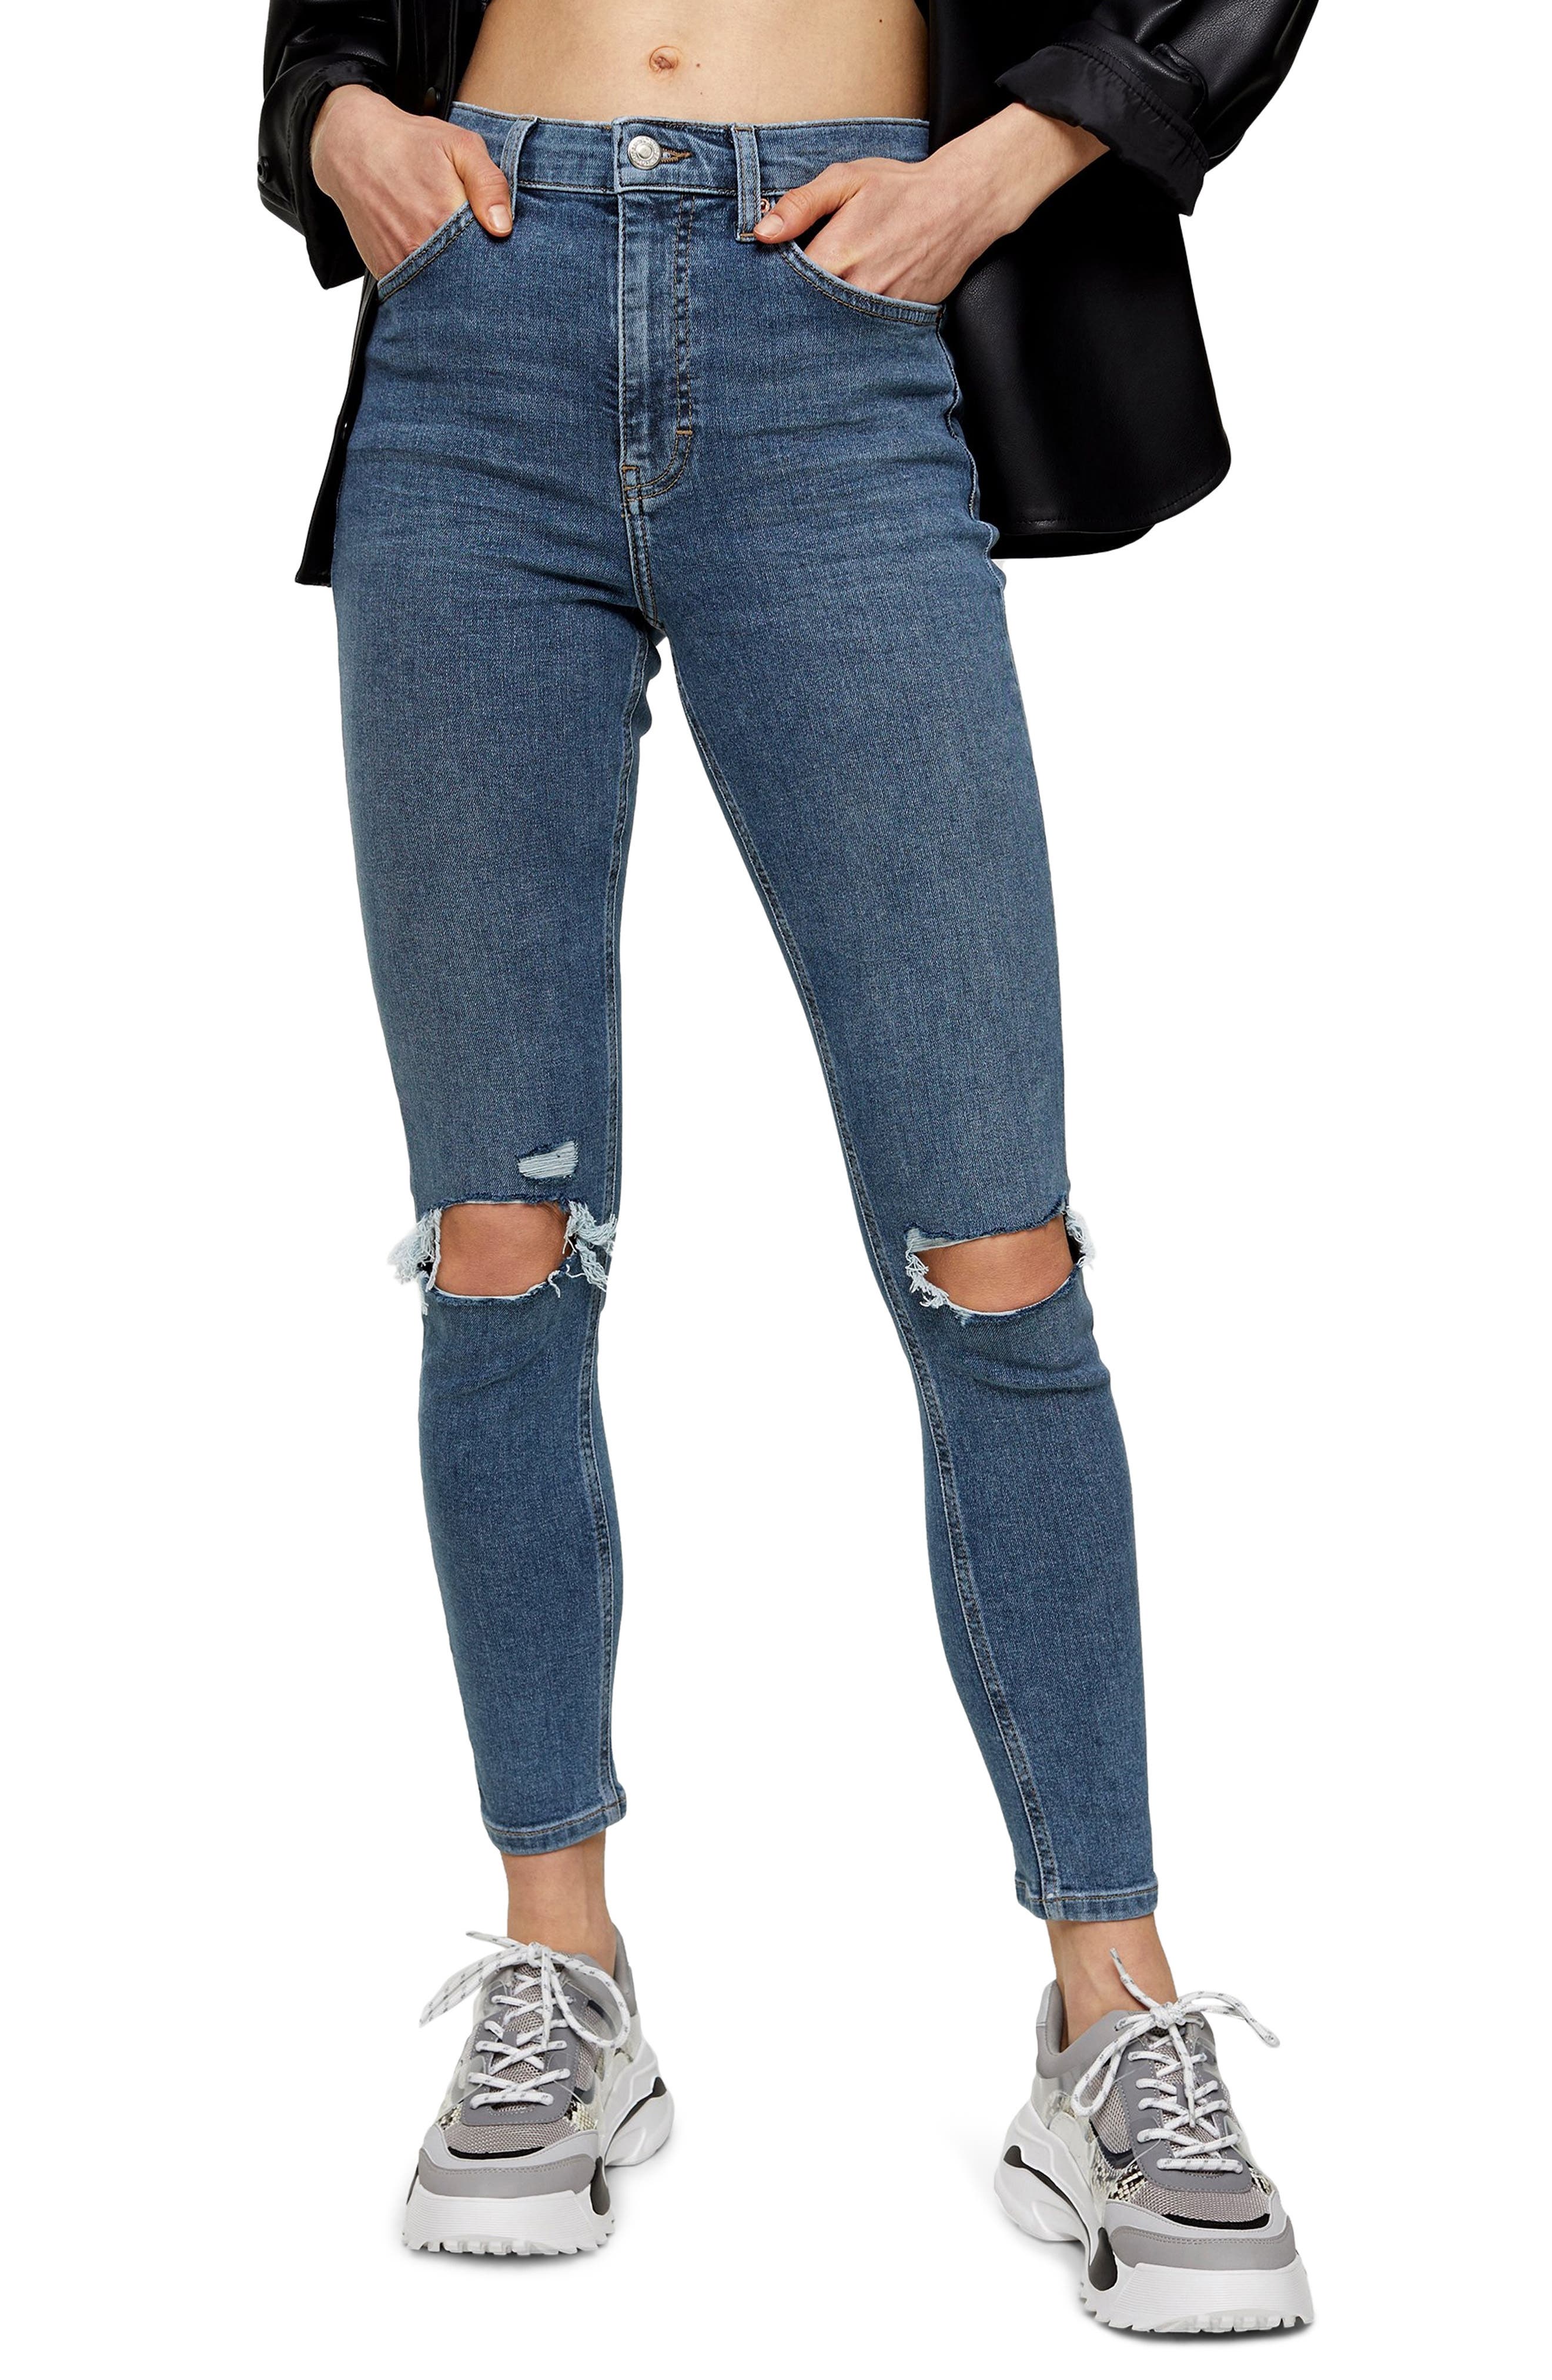 denim jeans women's topshop